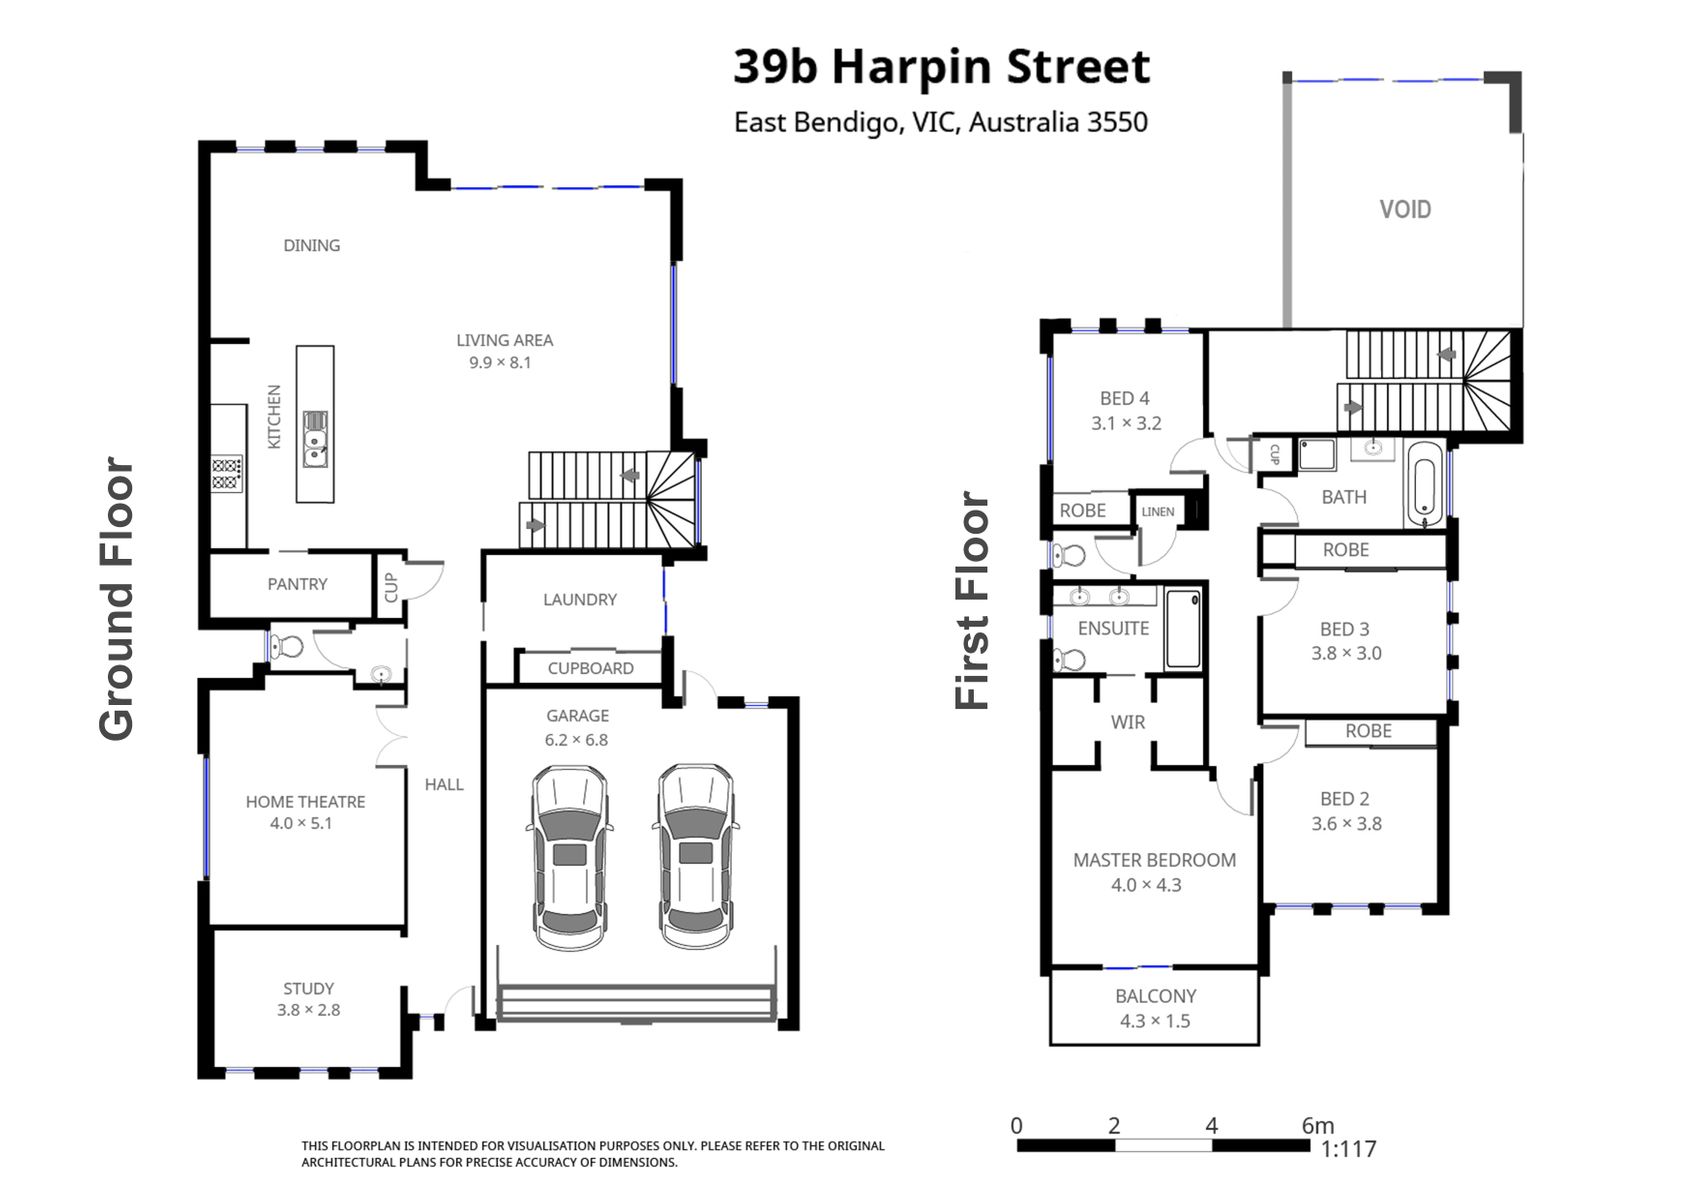 39b Harpin Street (2 floors)